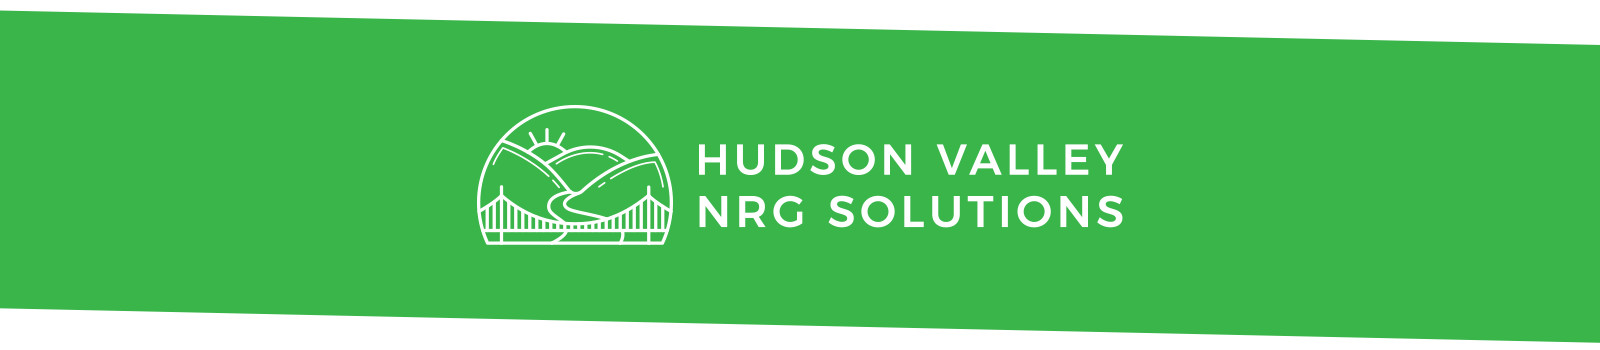 Hudson Valley NRG Solutions